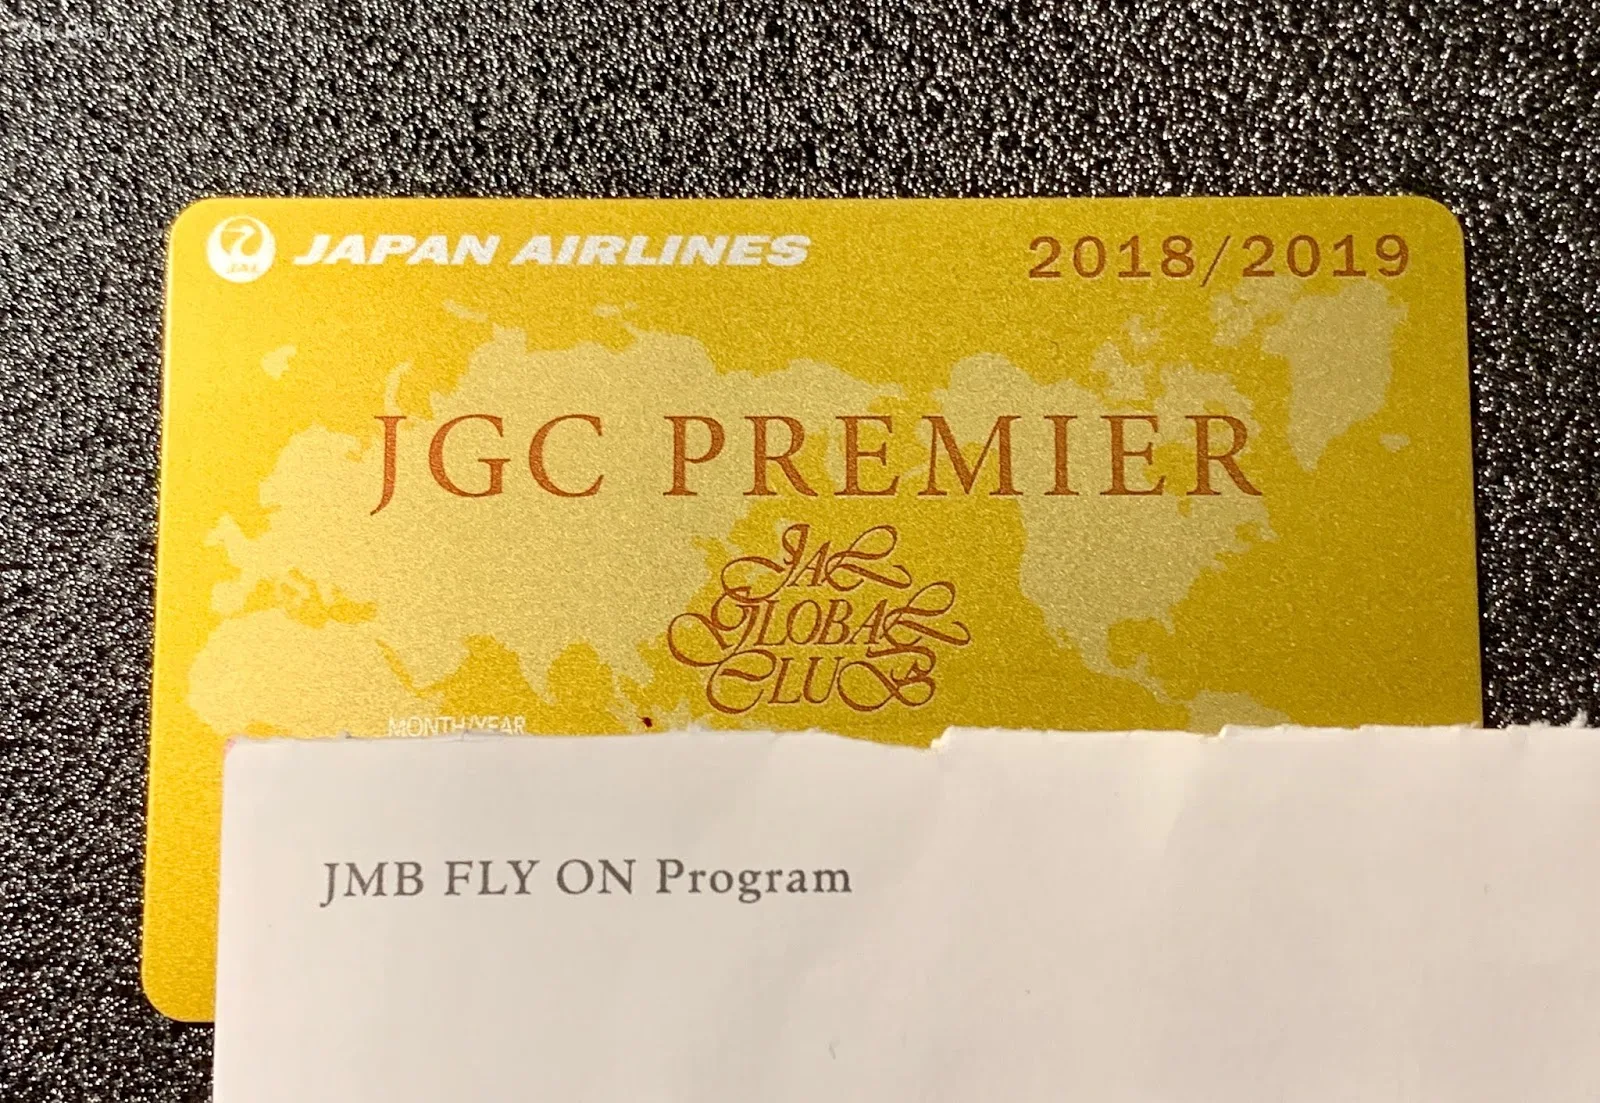 JGC PREMIER Card2